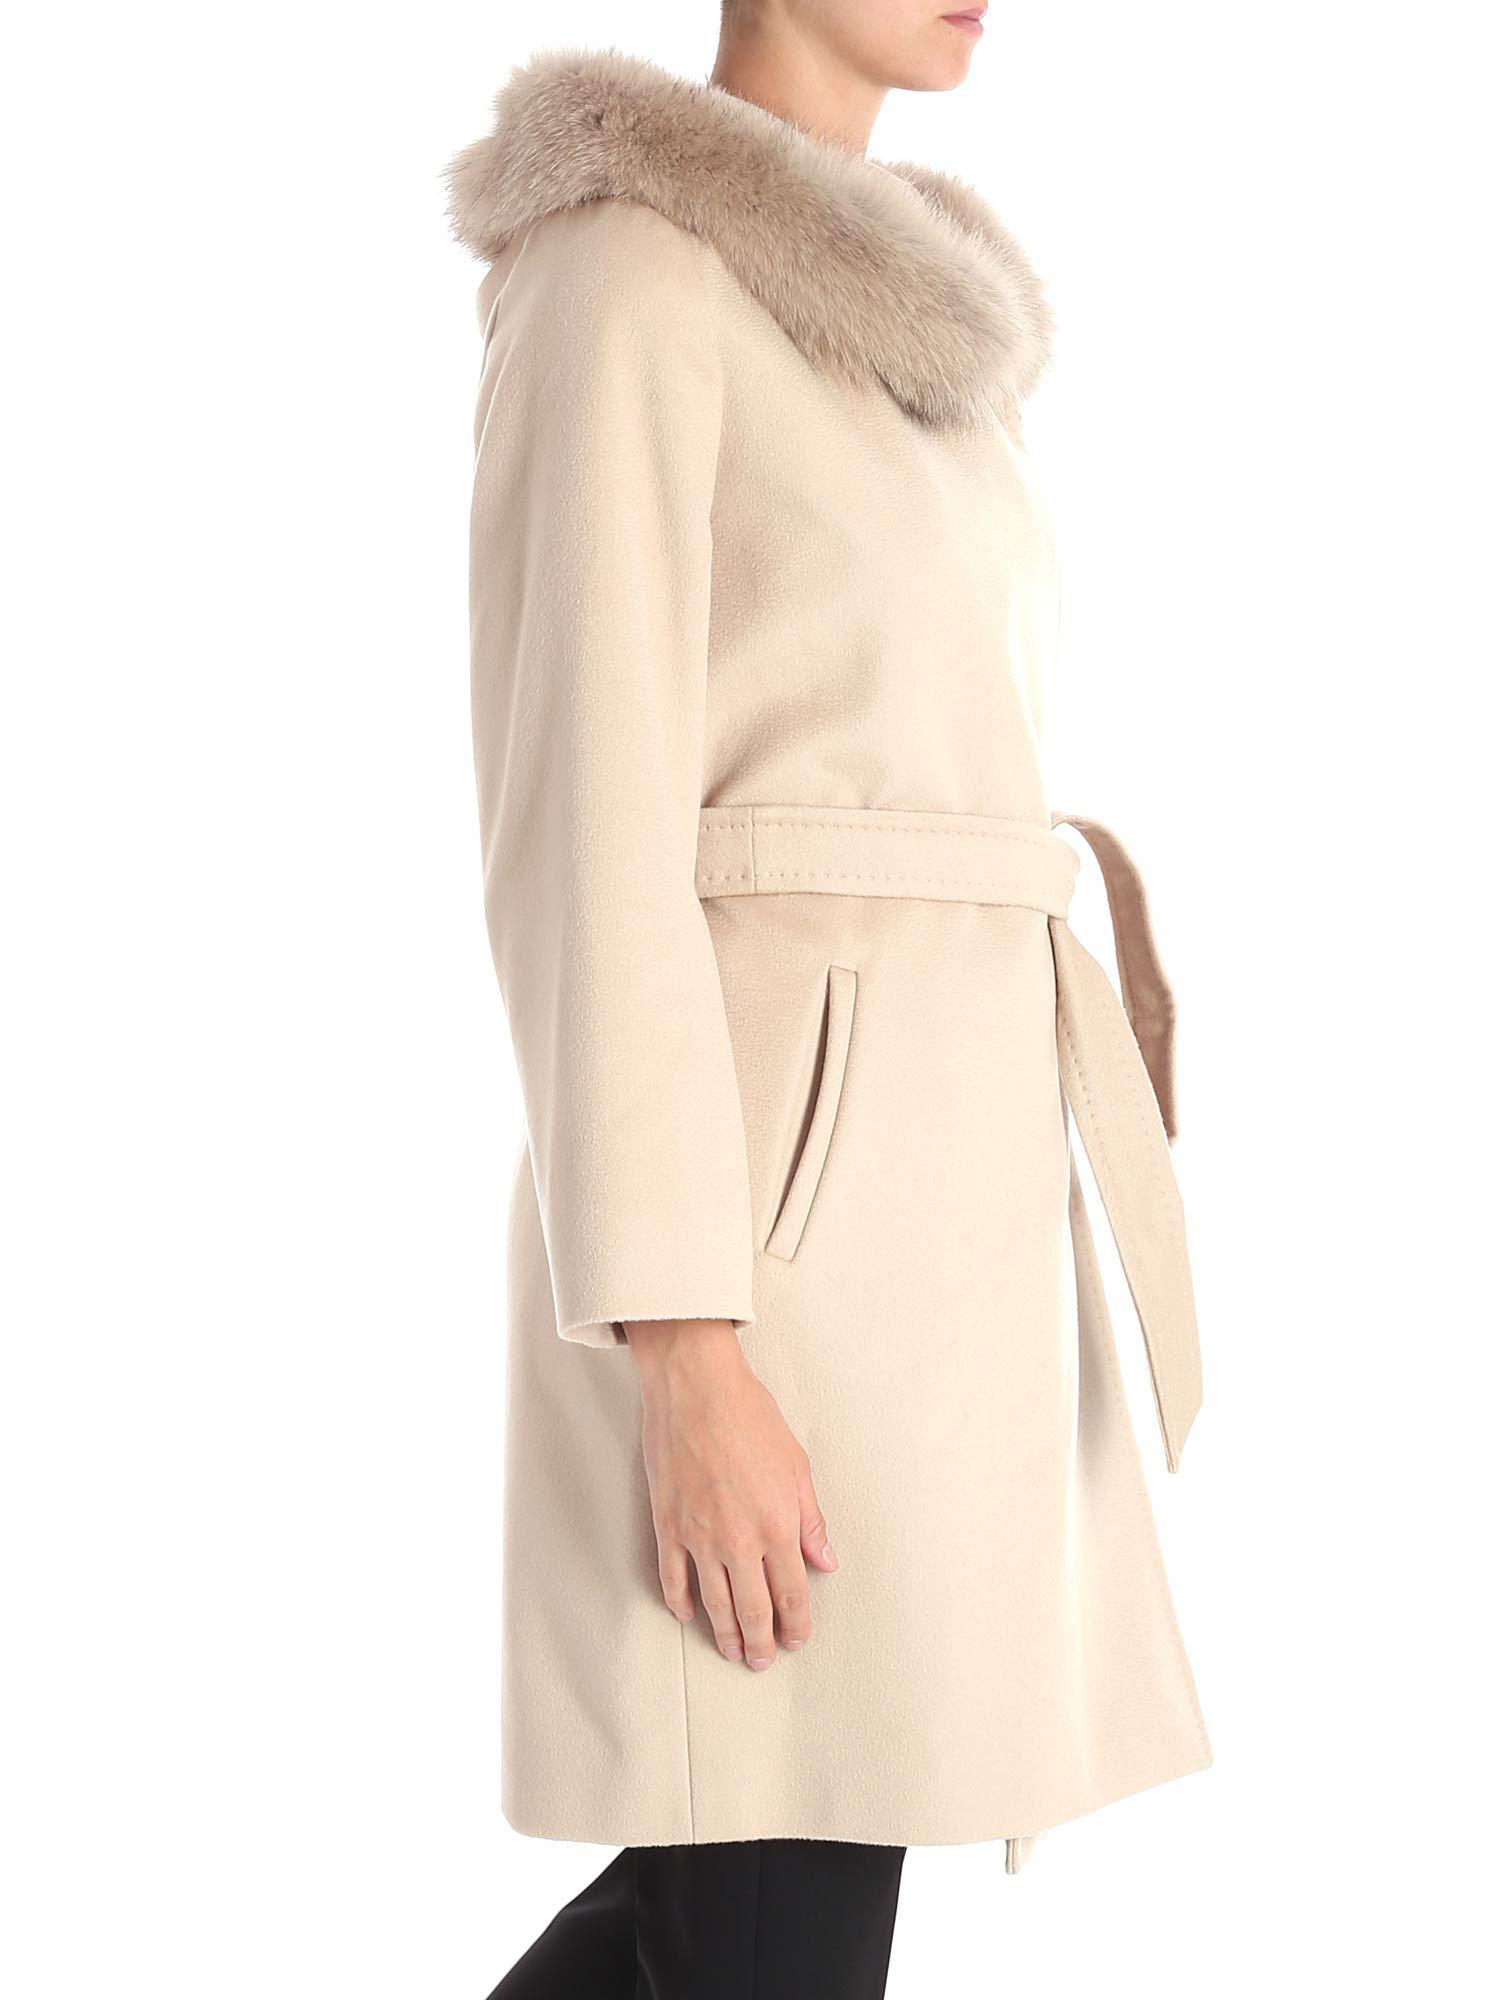 Max Mara Studio Wool Mango Beige Coat With Fur Insert in Natural - Lyst